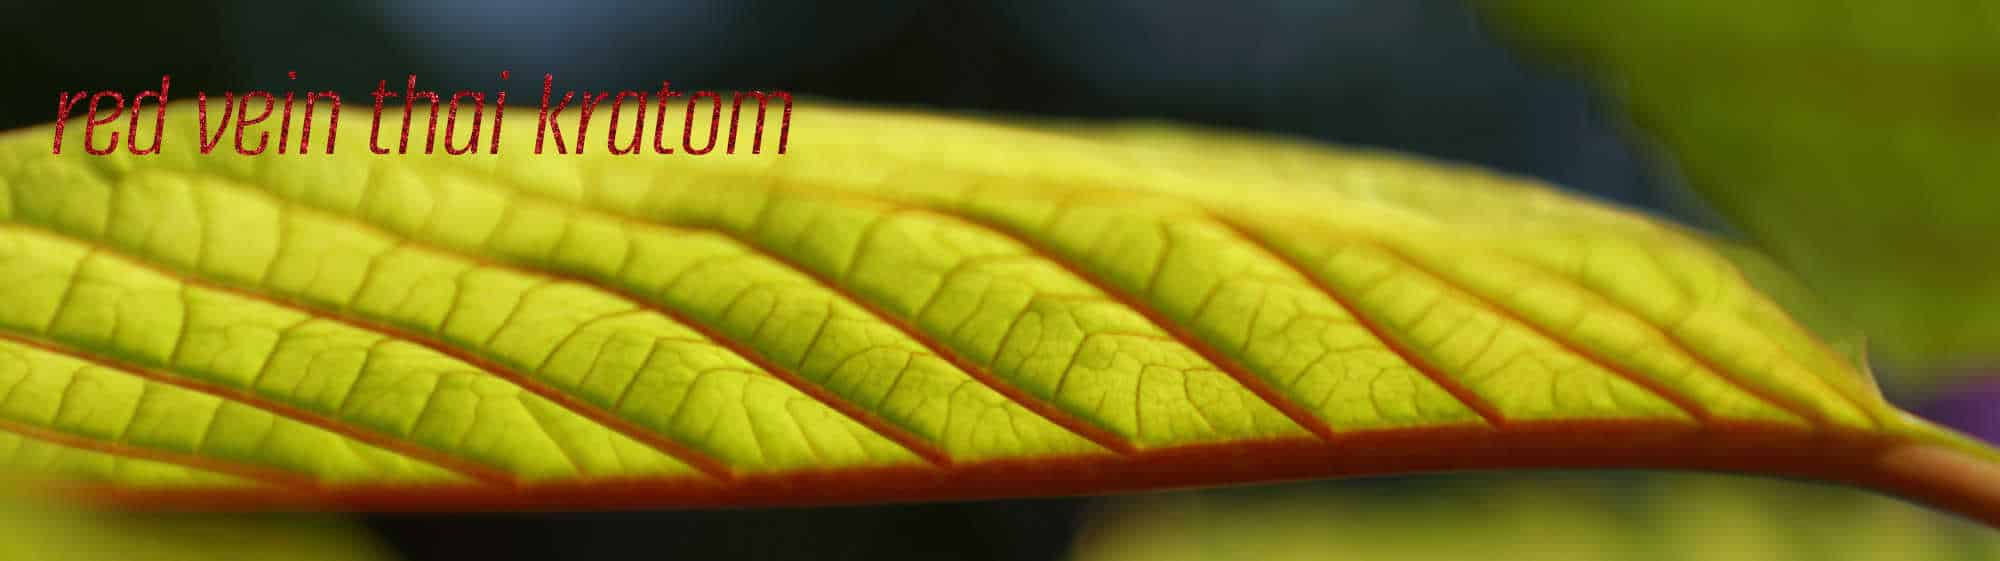 image of red vein thai kratom leaf